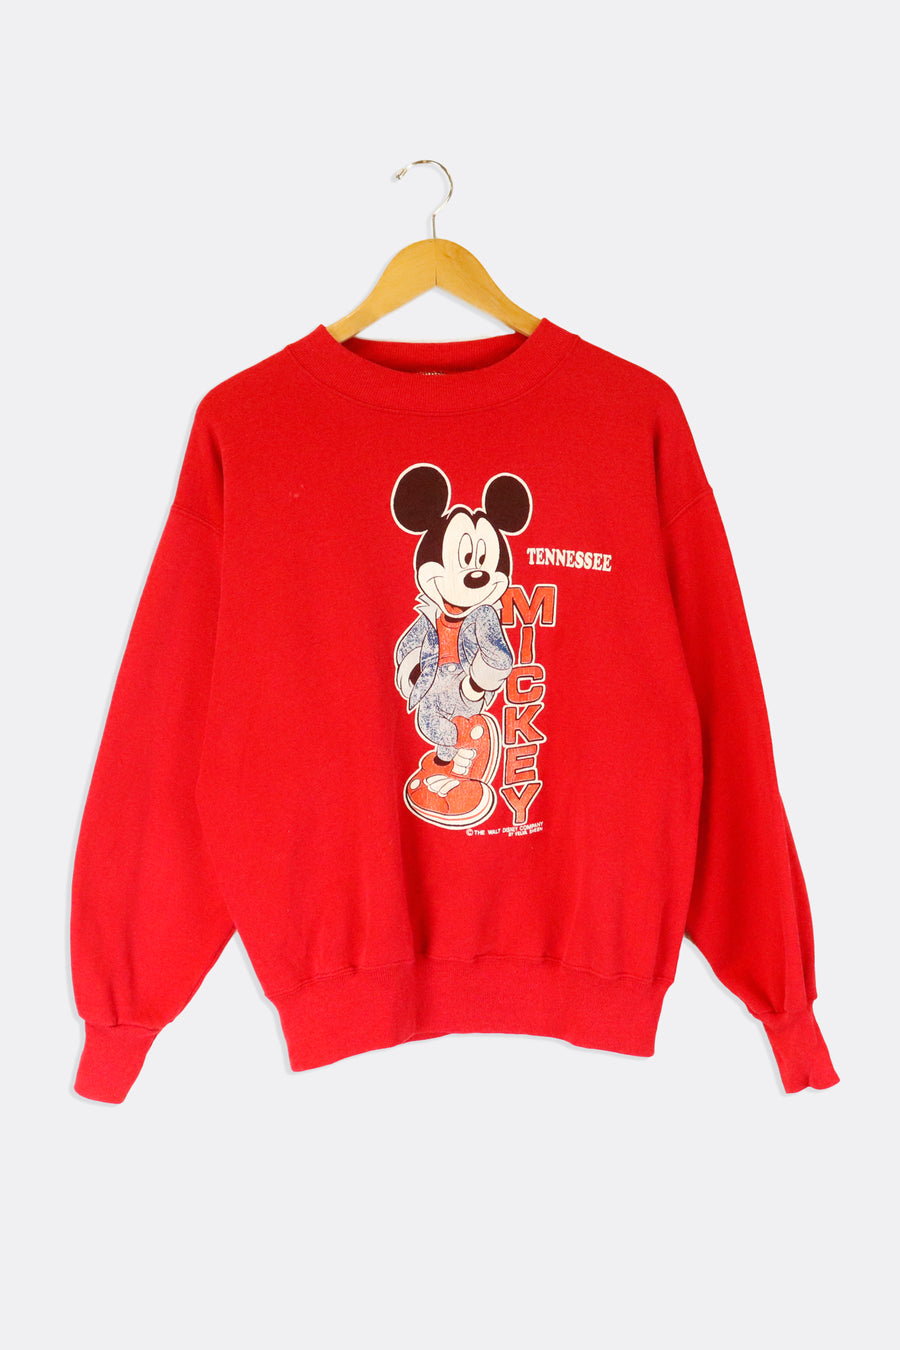 Vintage Disney Mickey Mouse Wearing All Denim Tennessee Sweatshirt Sz L